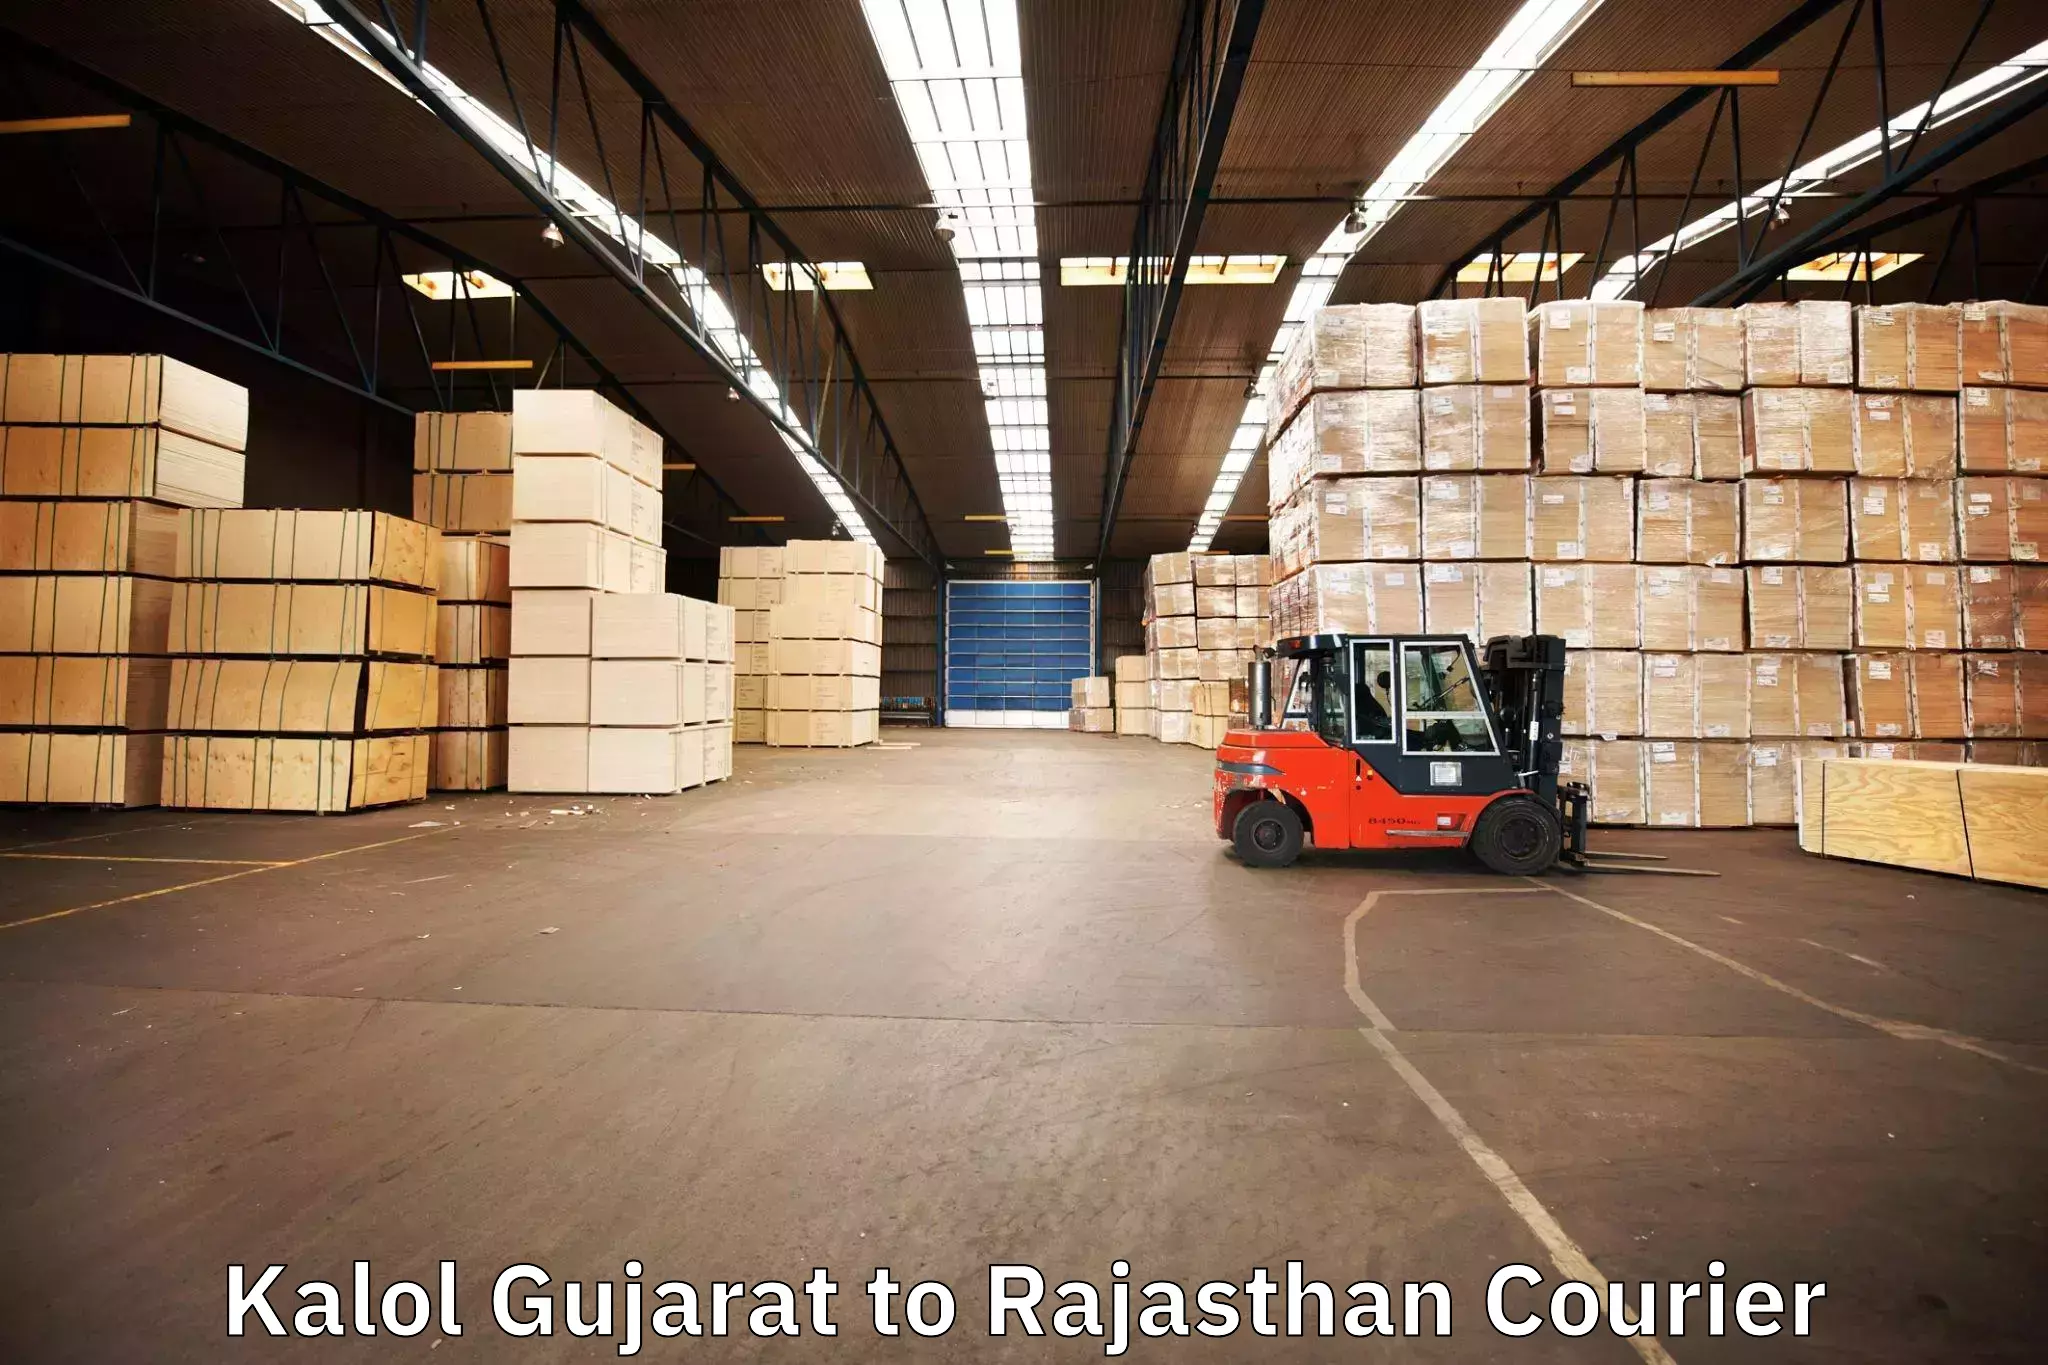 Efficient moving company Kalol Gujarat to Kherwara